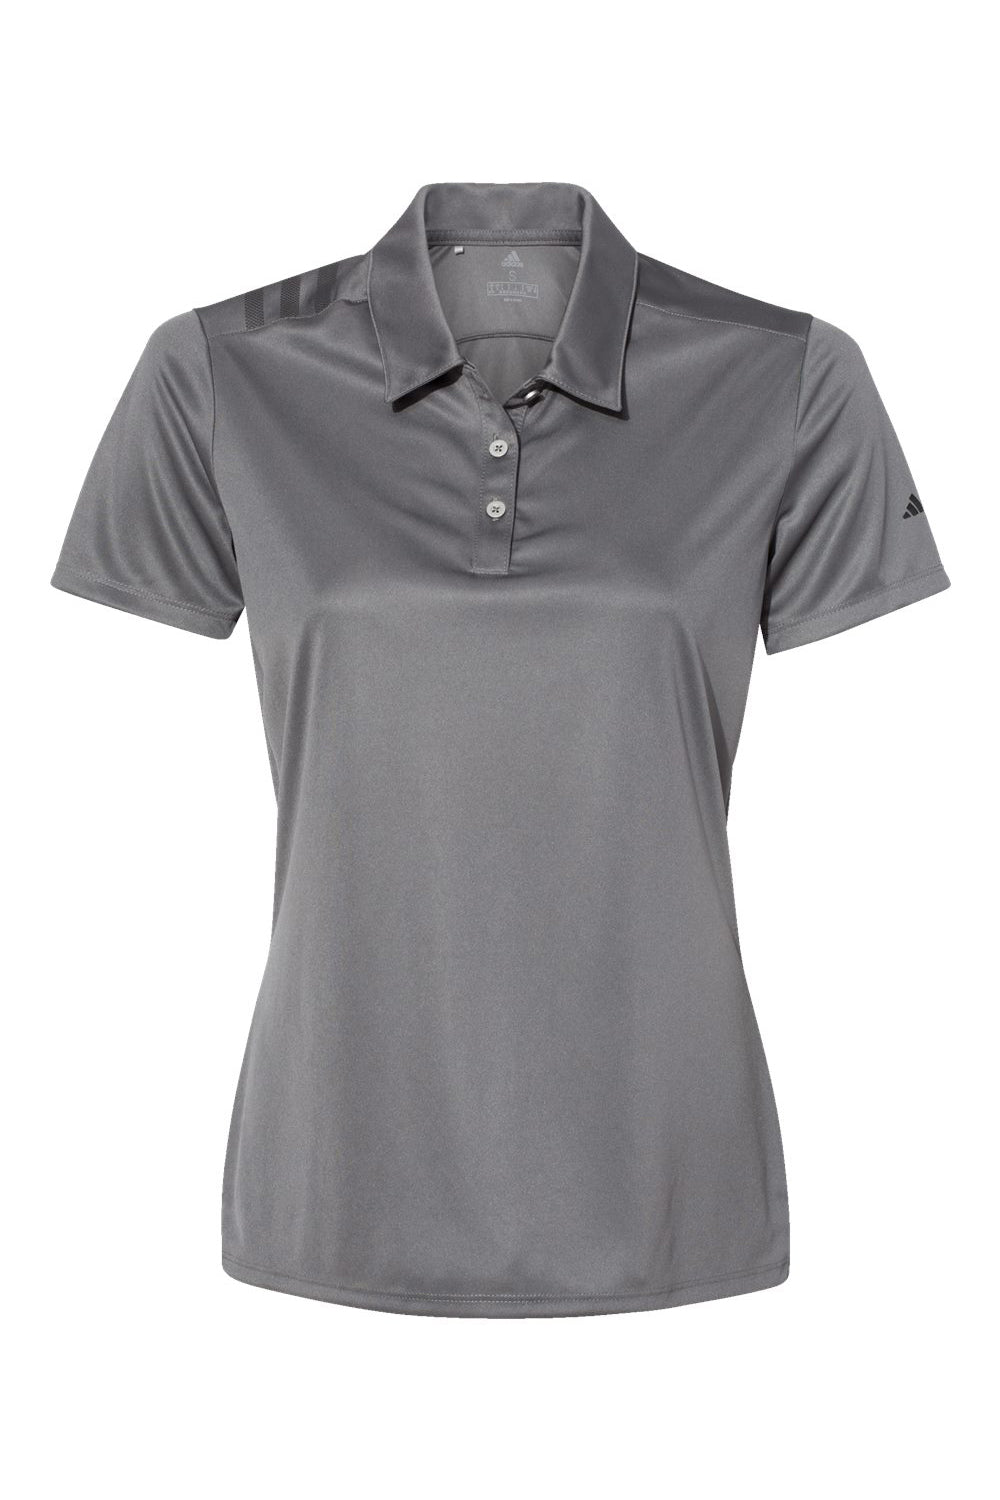 Adidas A325 Womens 3 Stripes UPF 50+ Short Sleeve Polo Shirt Grey/Black Flat Front